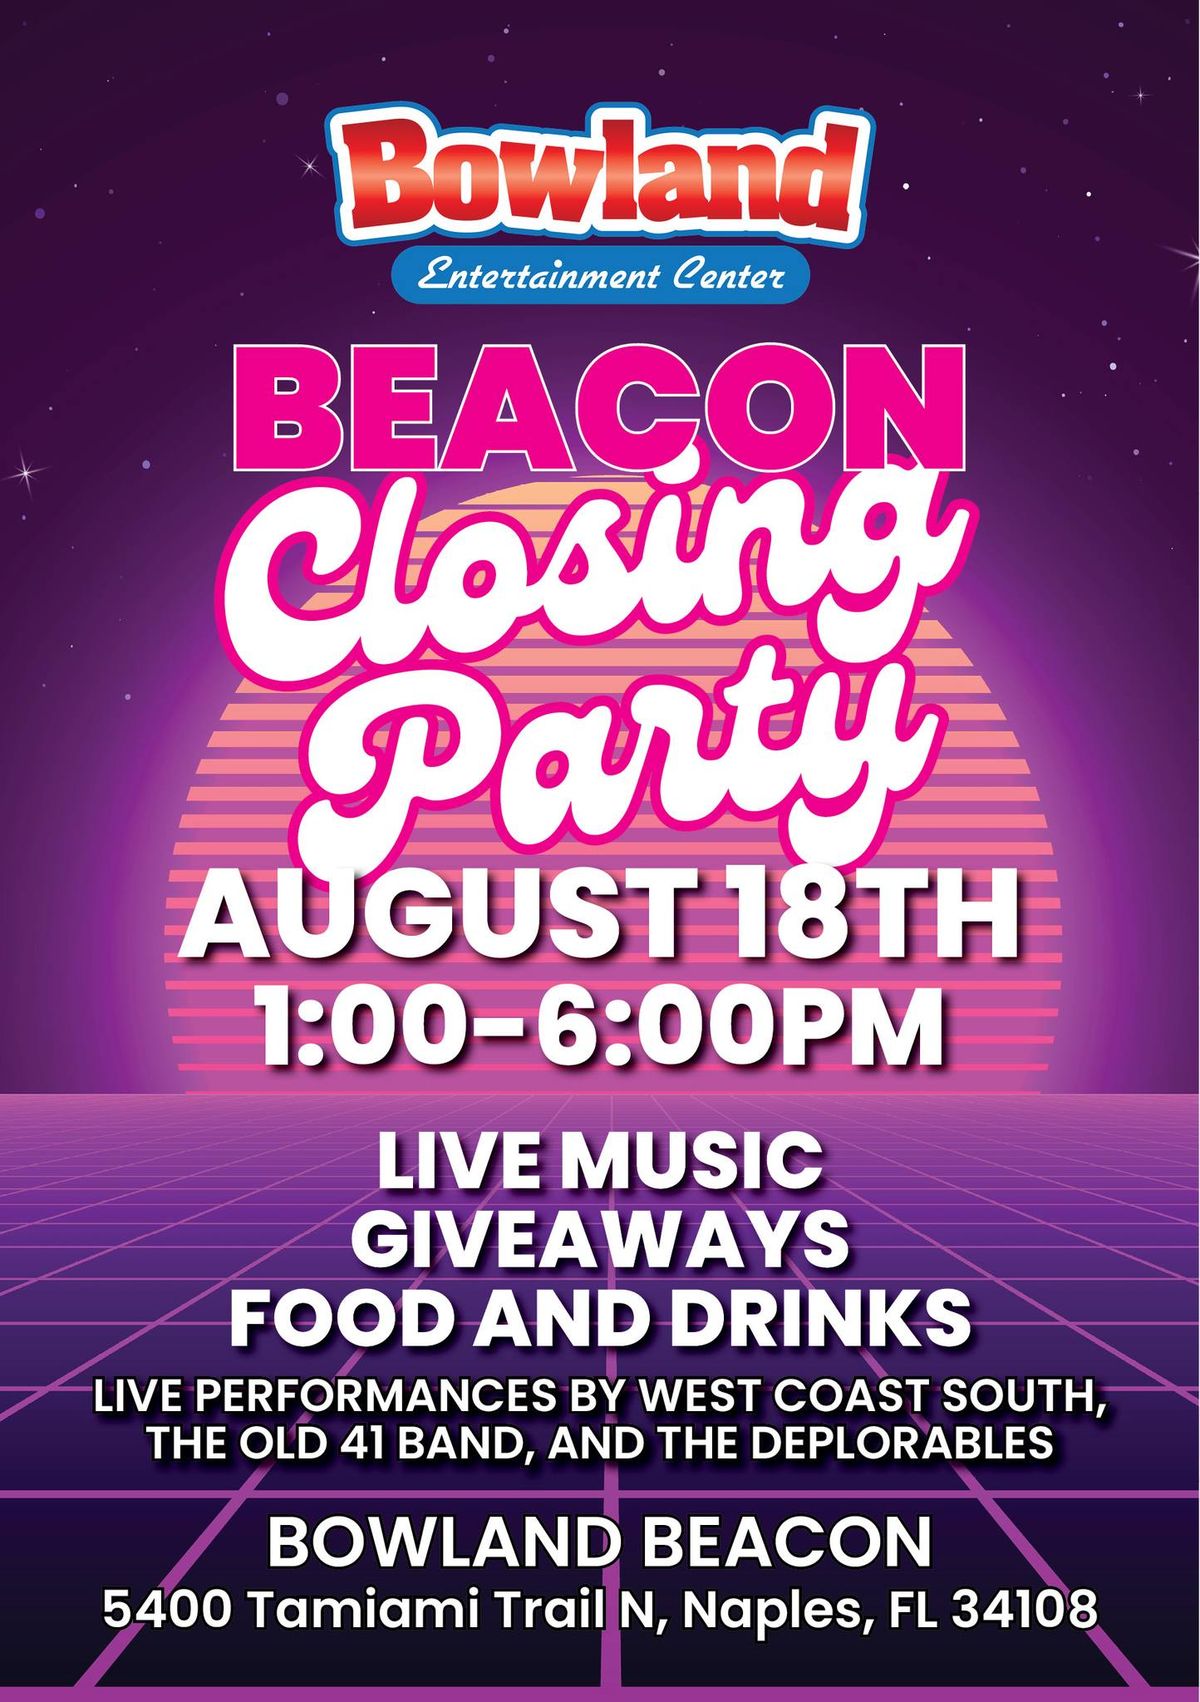 Bowland Beacon's Closing Party